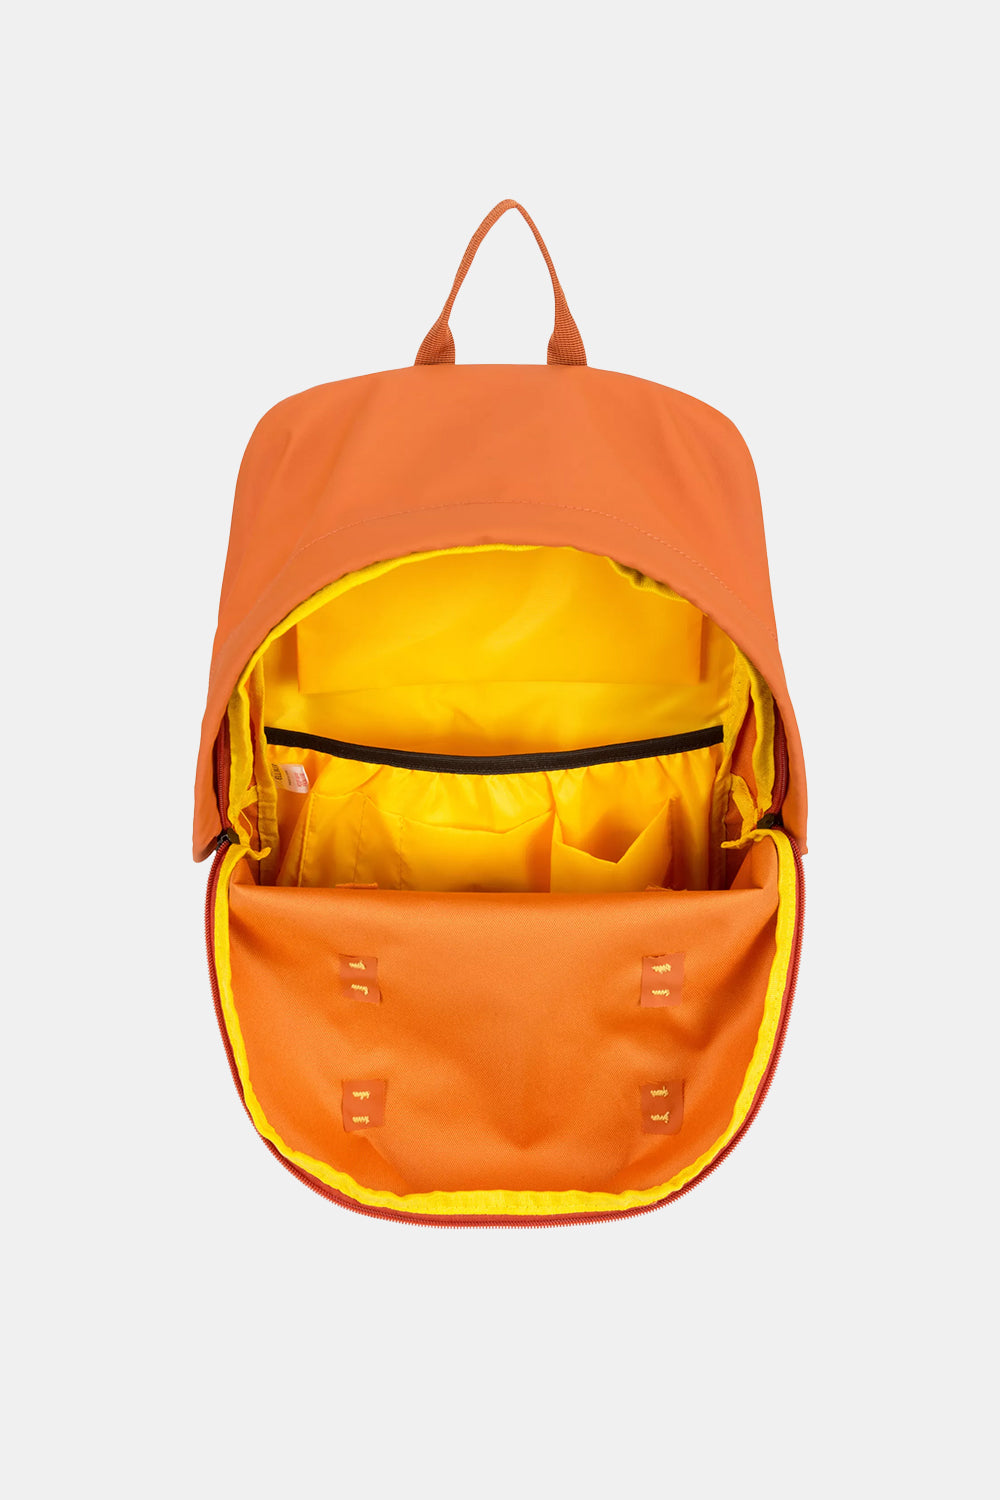 Elliker Kiln Hooded Zip Top Backpack 22L (Orange)
